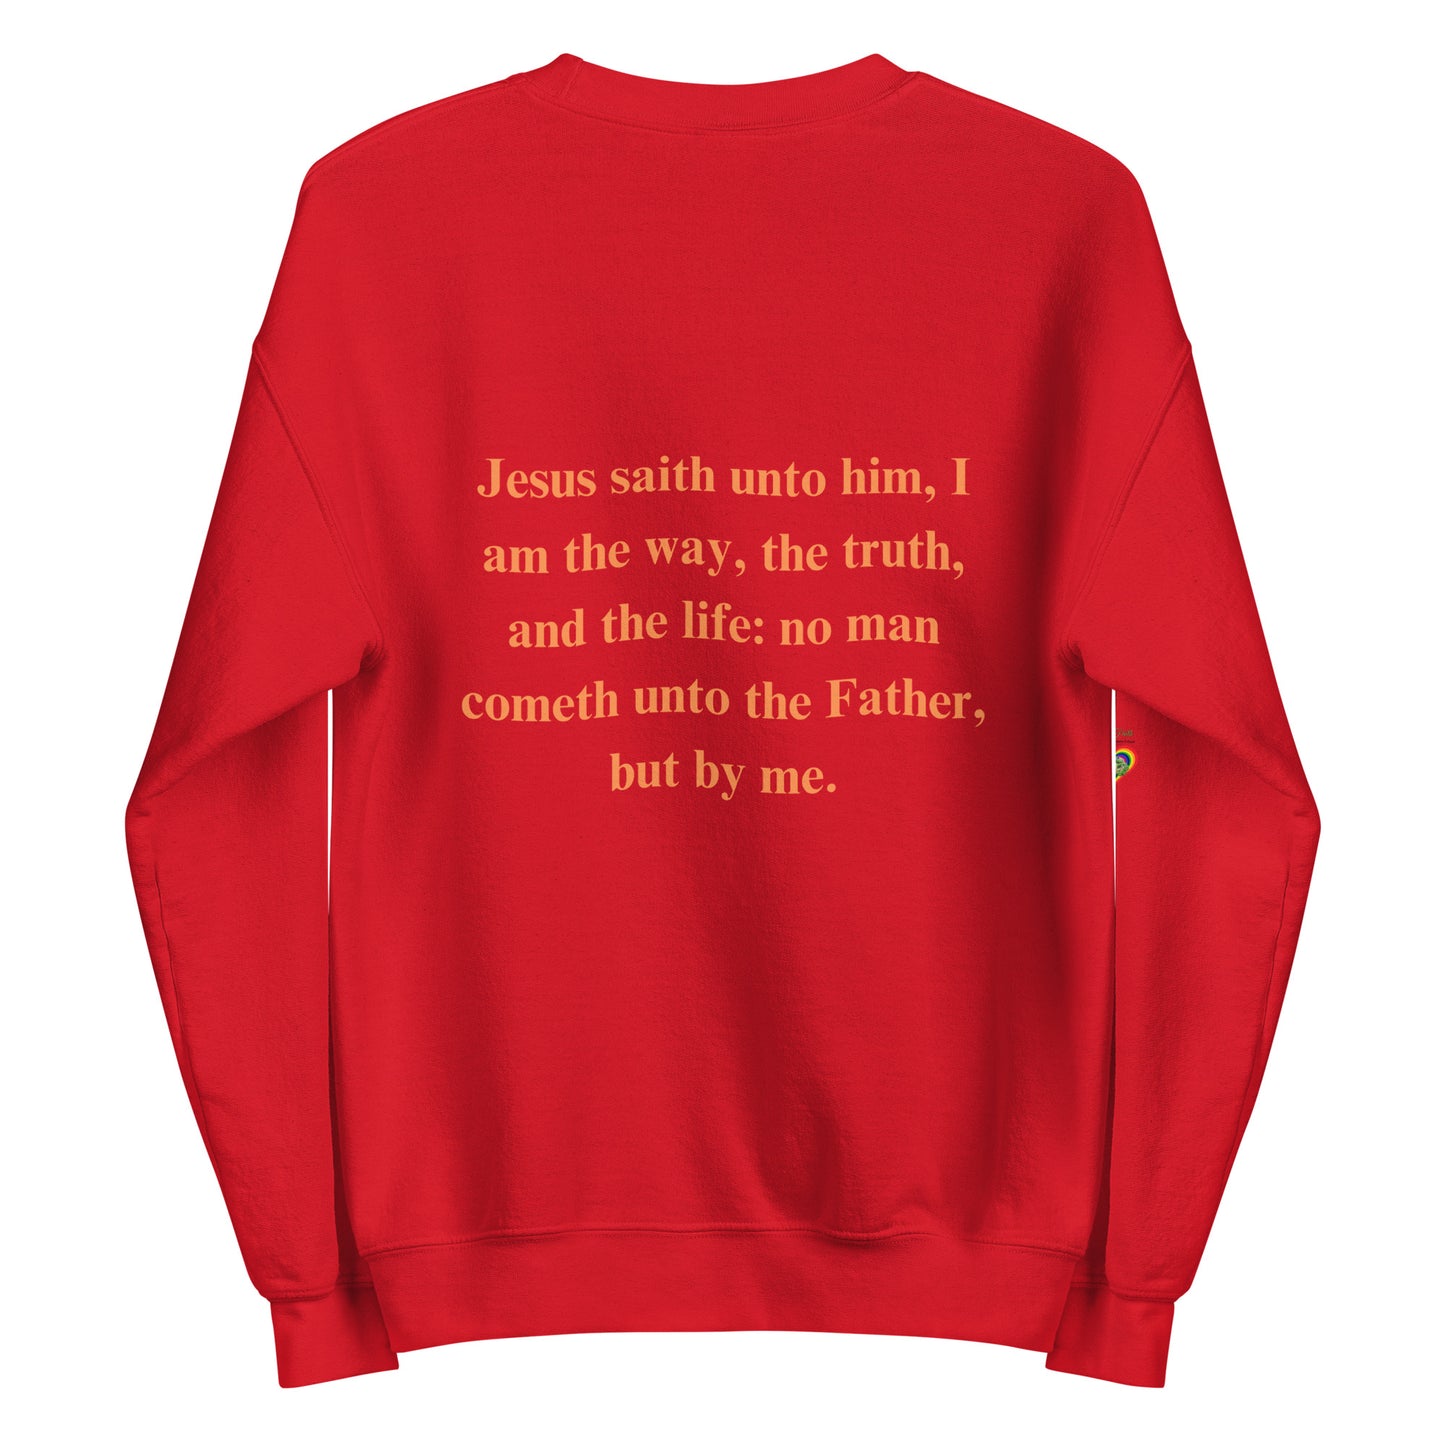 By Faith Jesus Christ Saves John 14:6 Unisex Sweatshirt